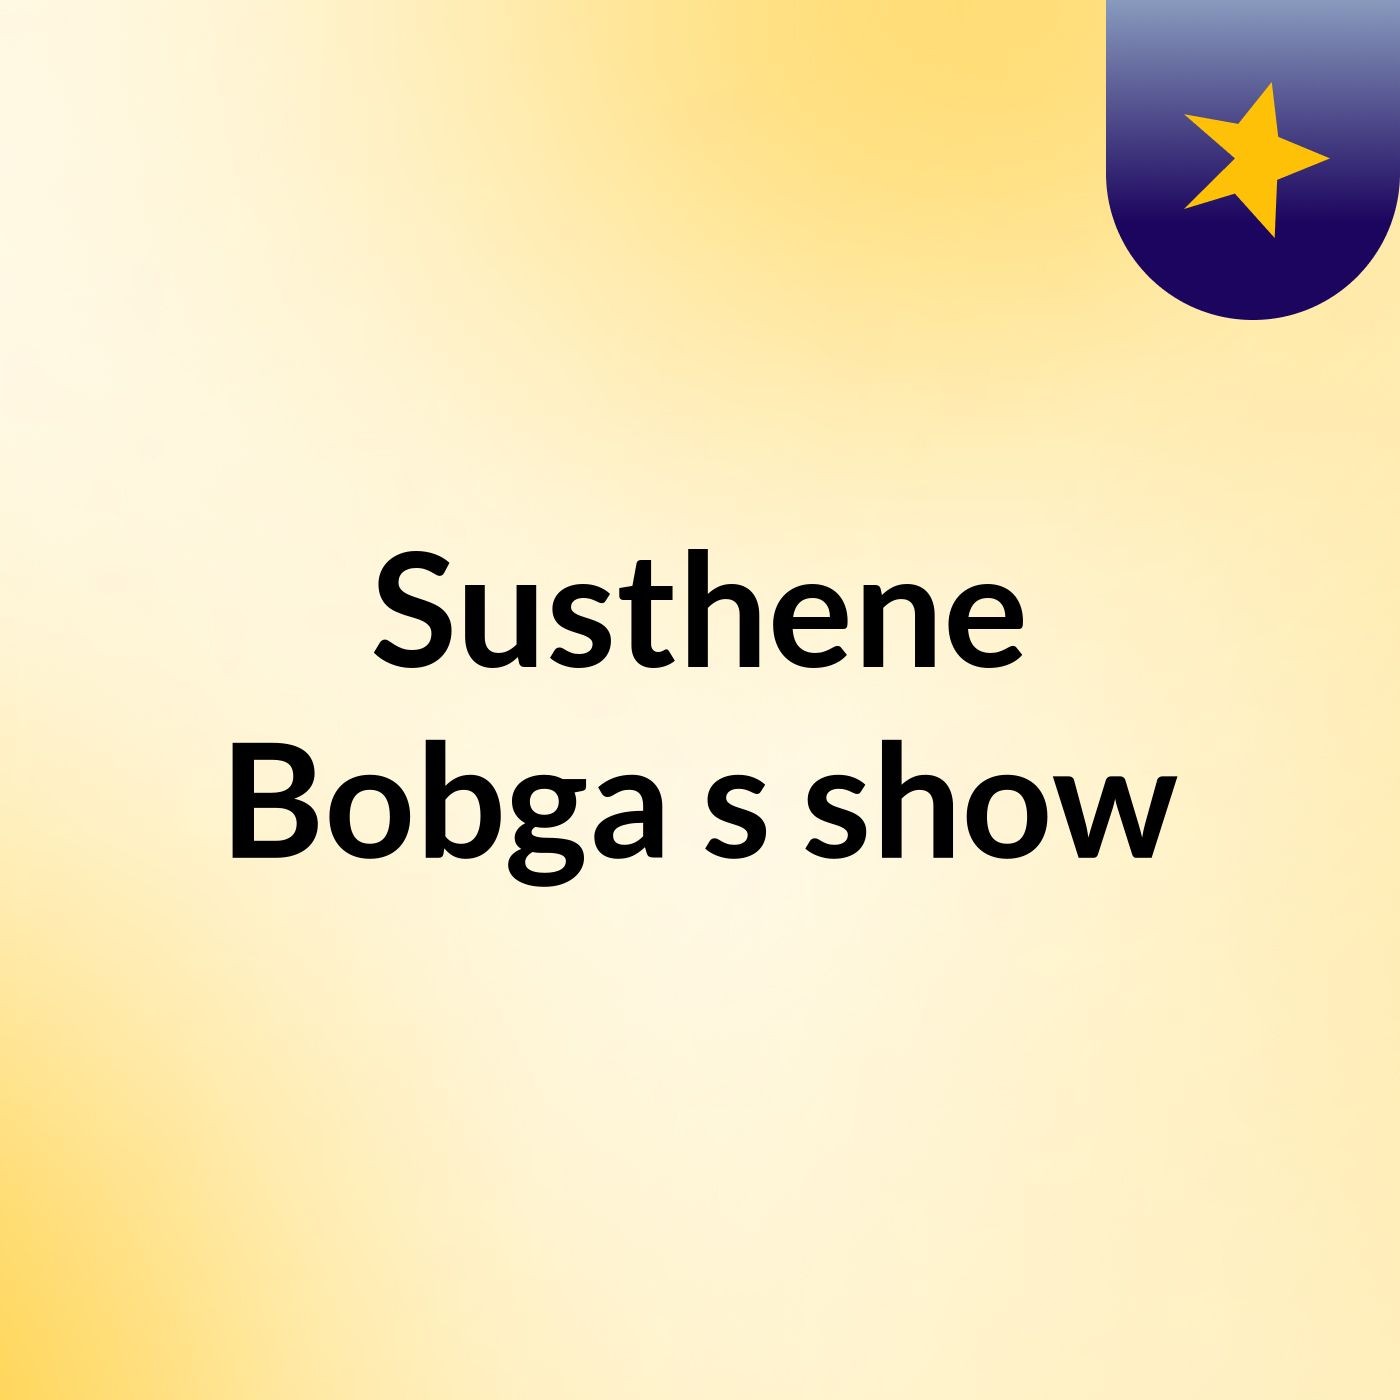 Susthene Bobga's show